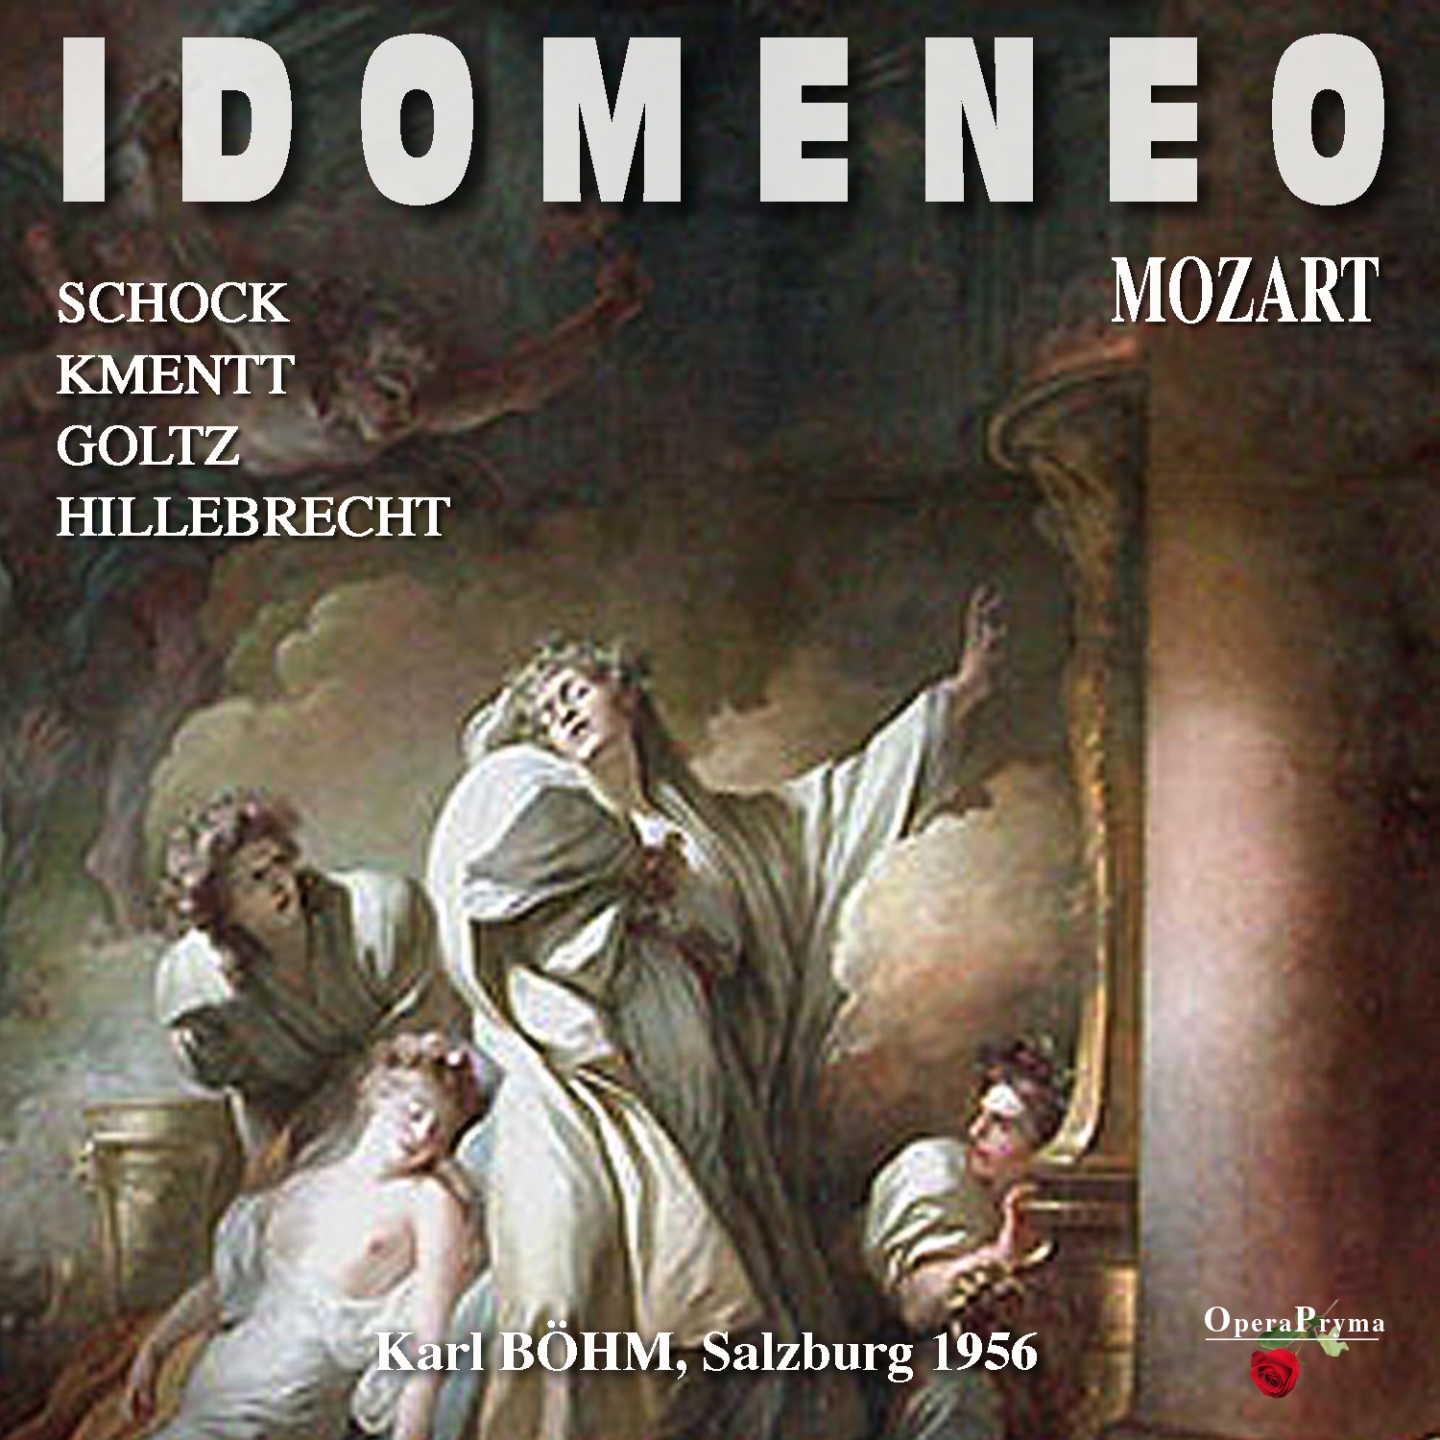 Idomeneo, K. 366, Act II: "Vattene, prence" (Idomeneo, Idamante)